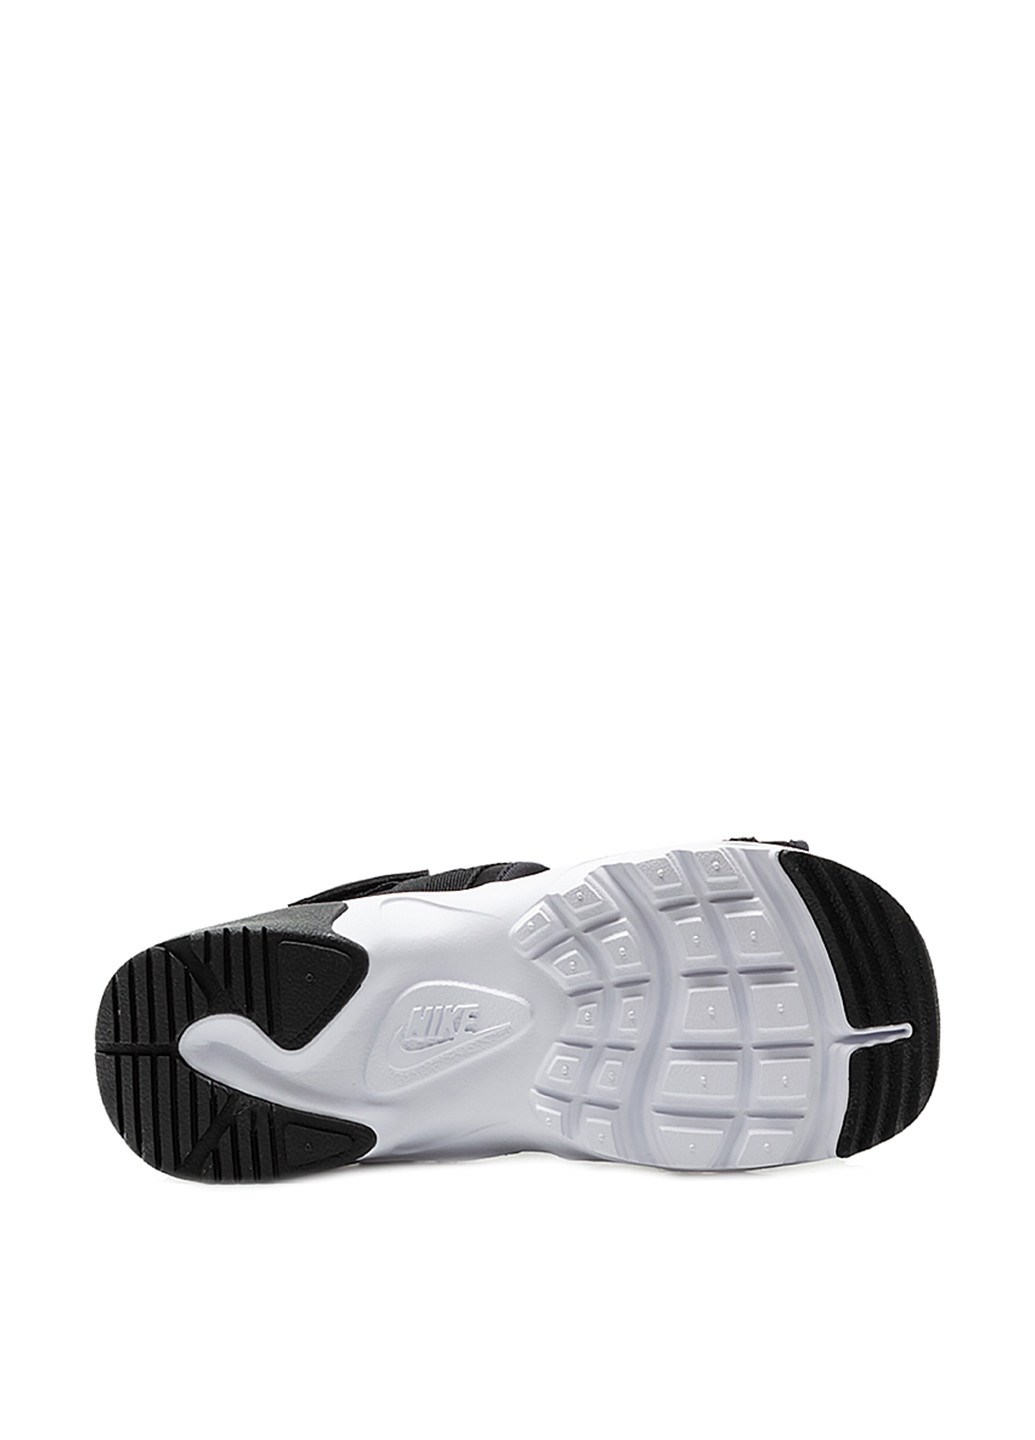 Спортивные сандалии Nike на липучке